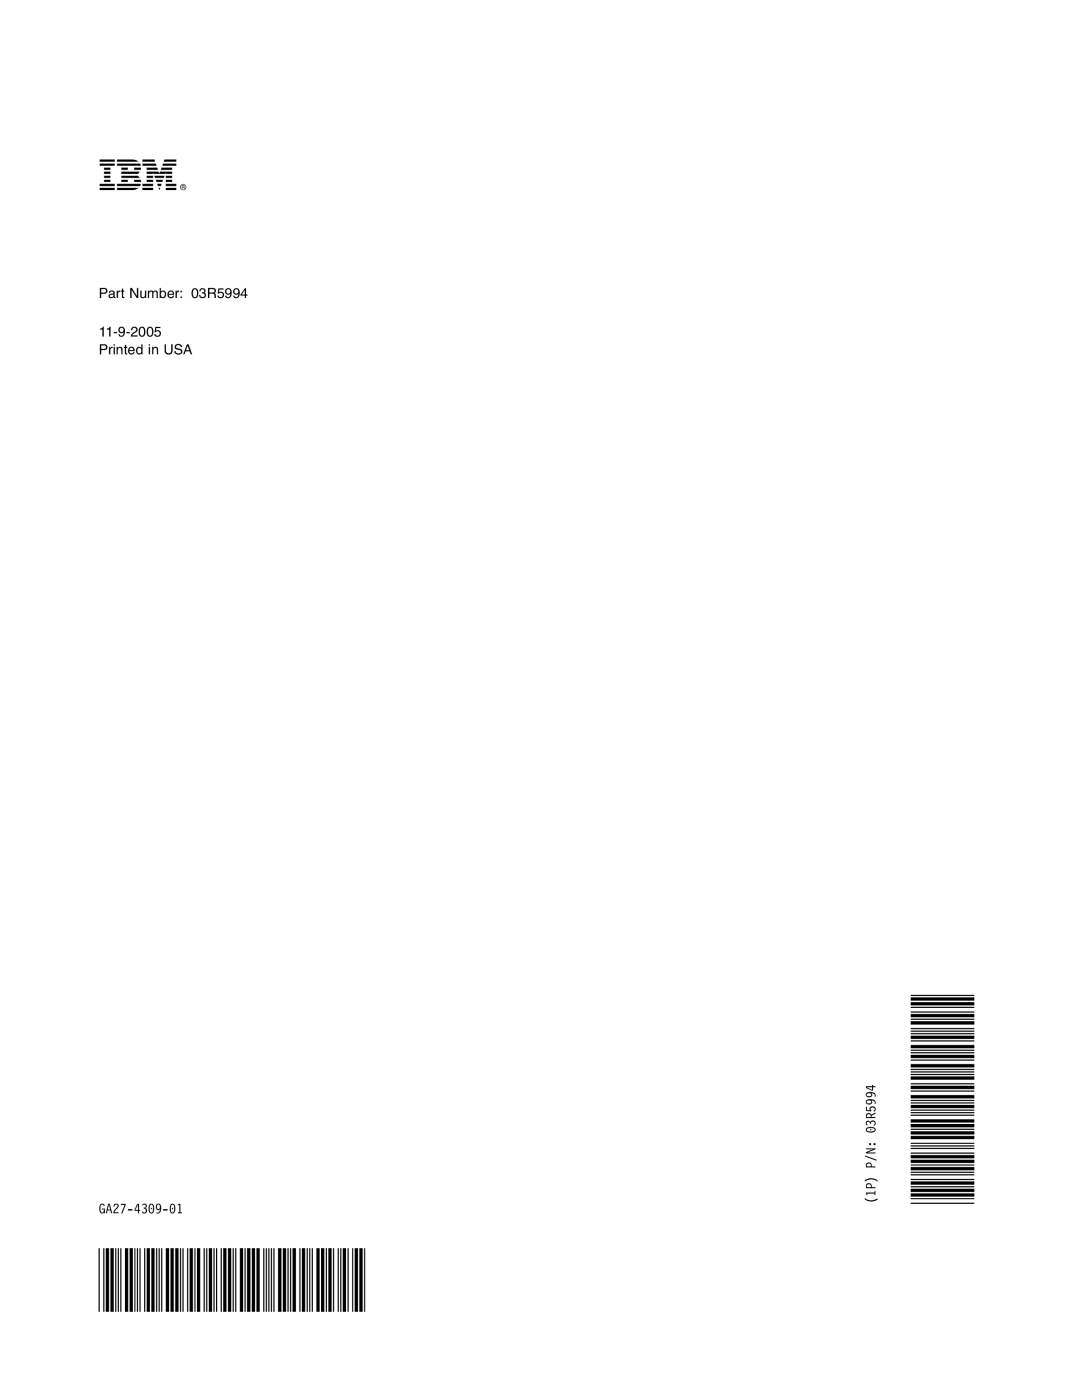 IBM 32x, W2H, 31x manual GA27-4309-01, 1P P/N 03R5994 